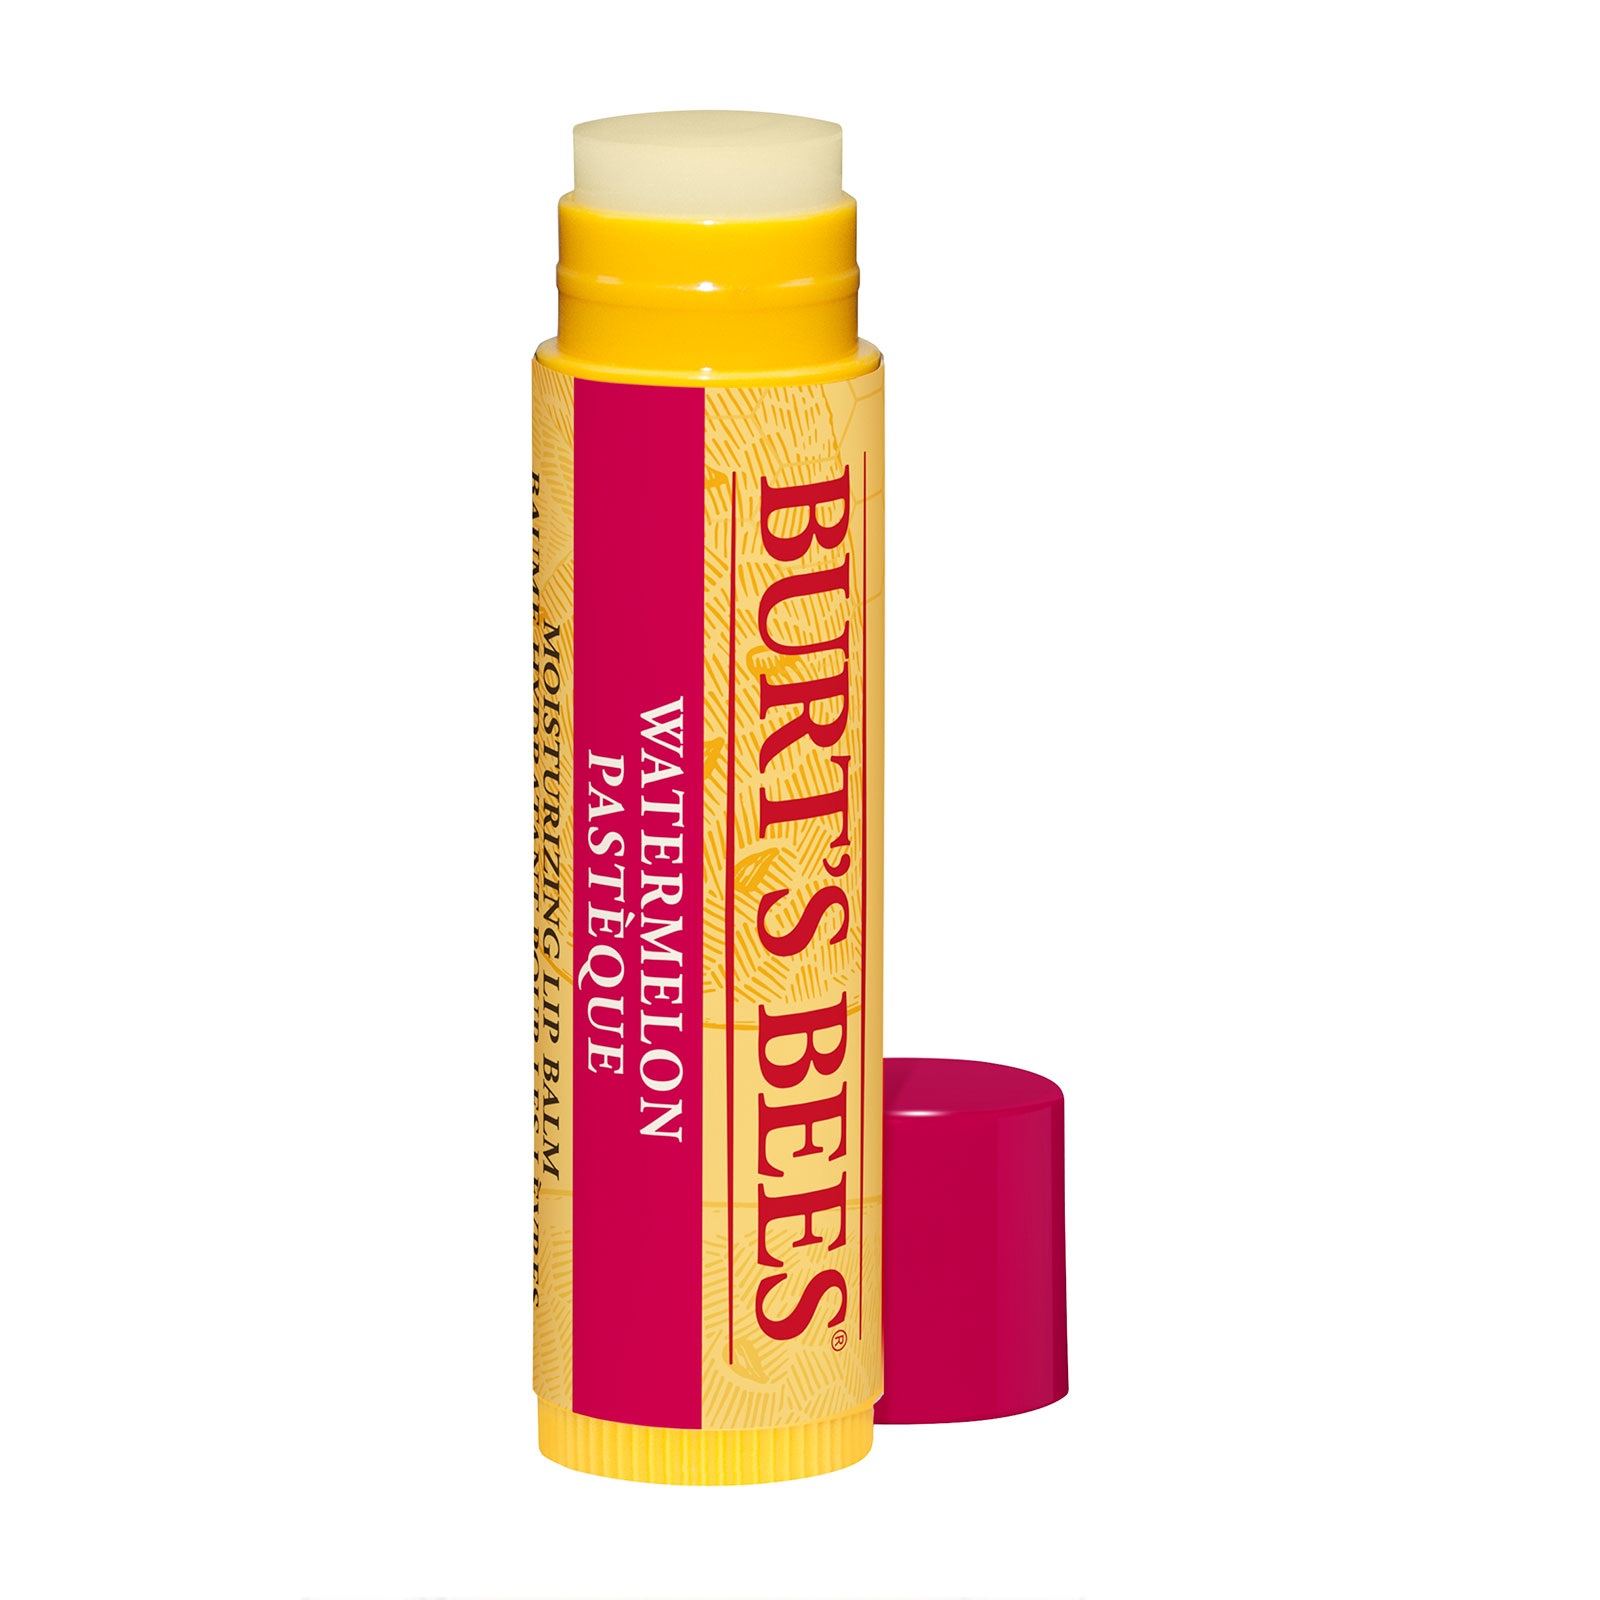 Burt's Bees 100% Natural Moisturizing Lip Balm Watermelon 4.25G